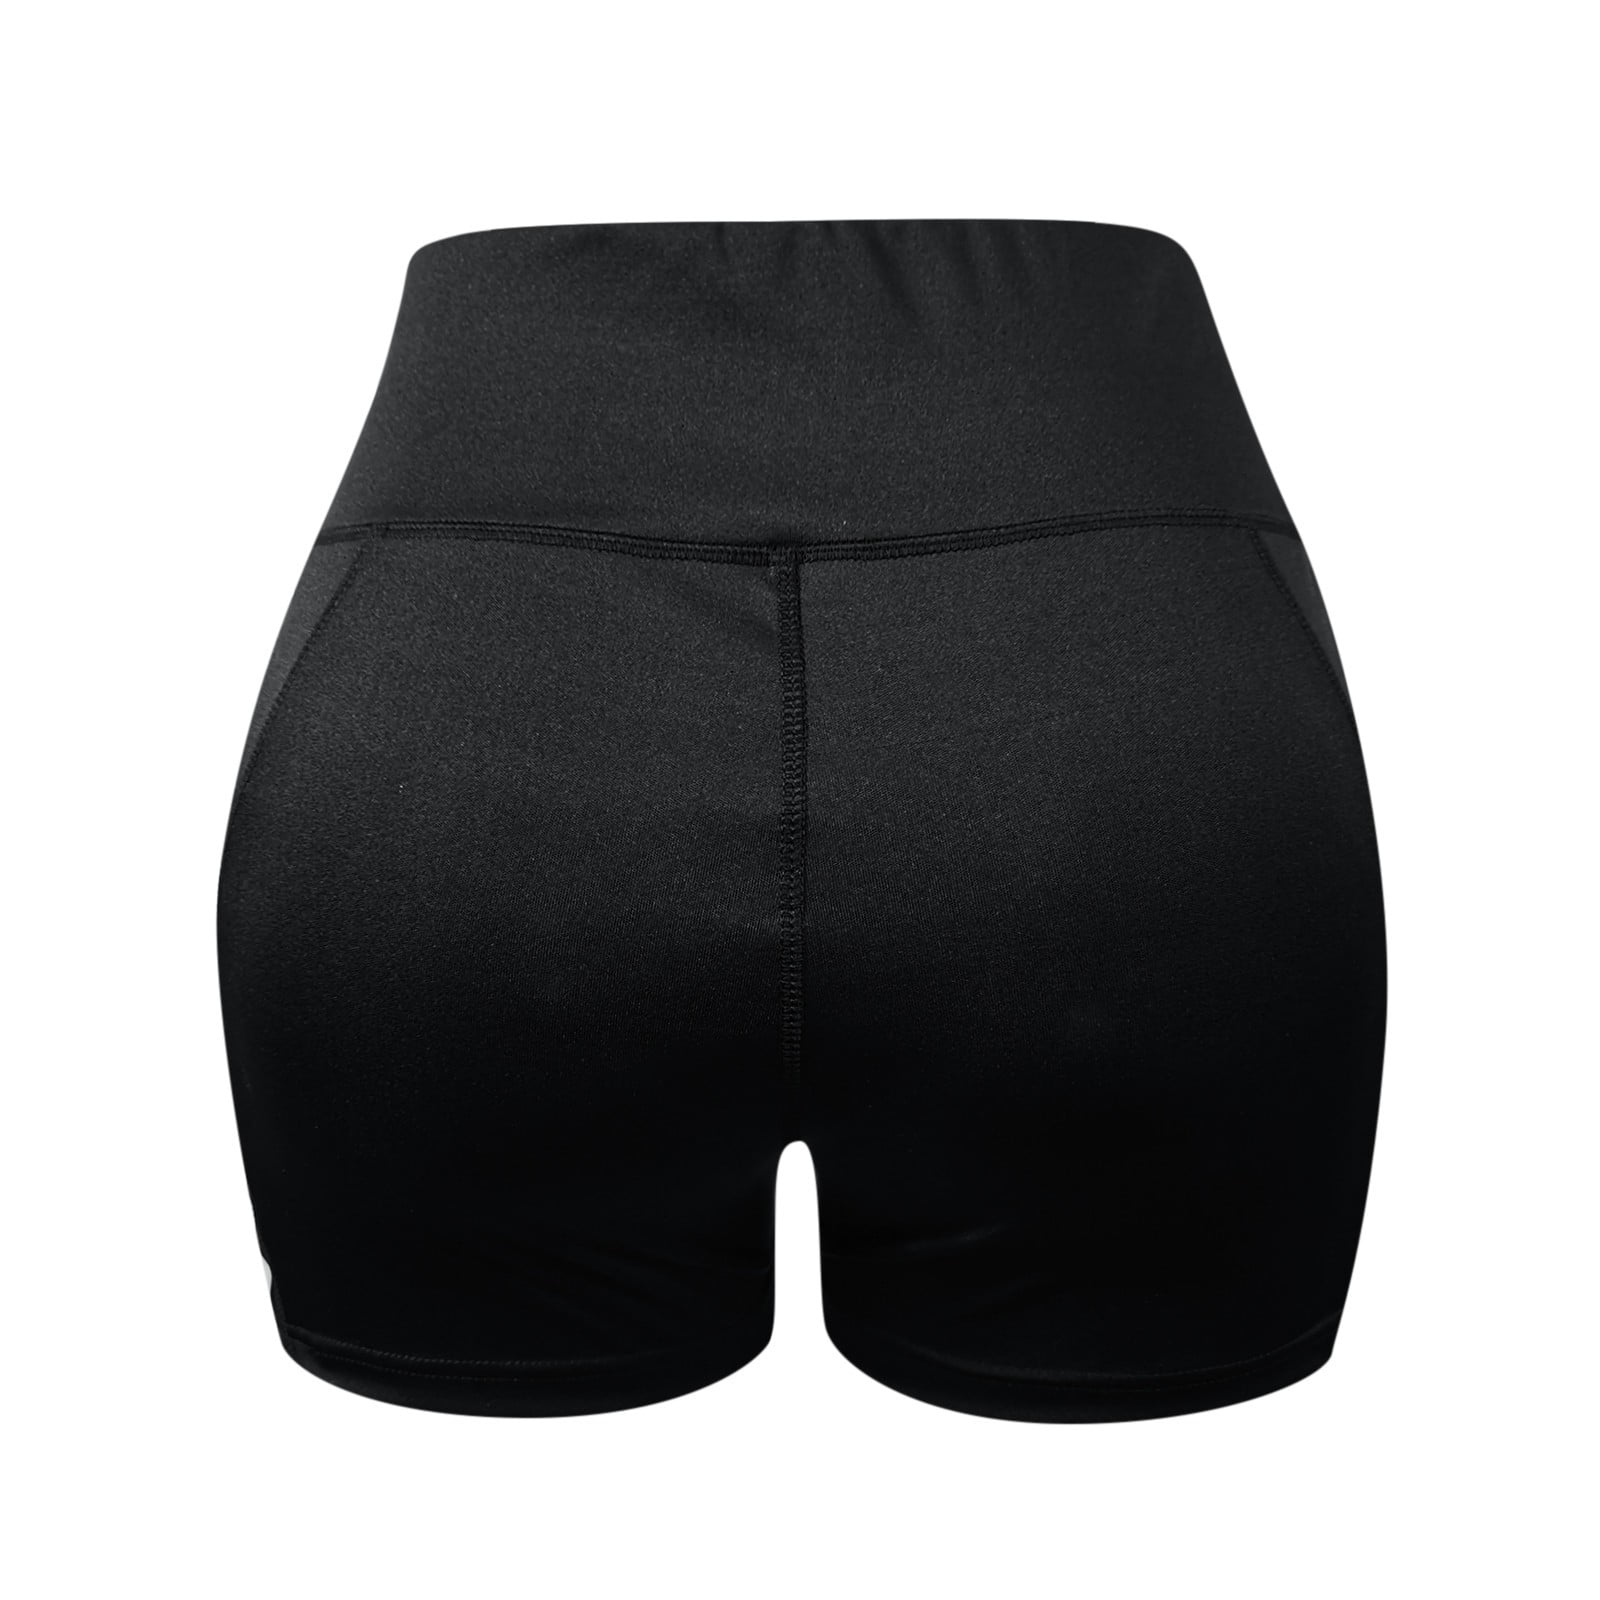 MRULIC yoga shorts for women Women's Casual Sport Solid Fashion